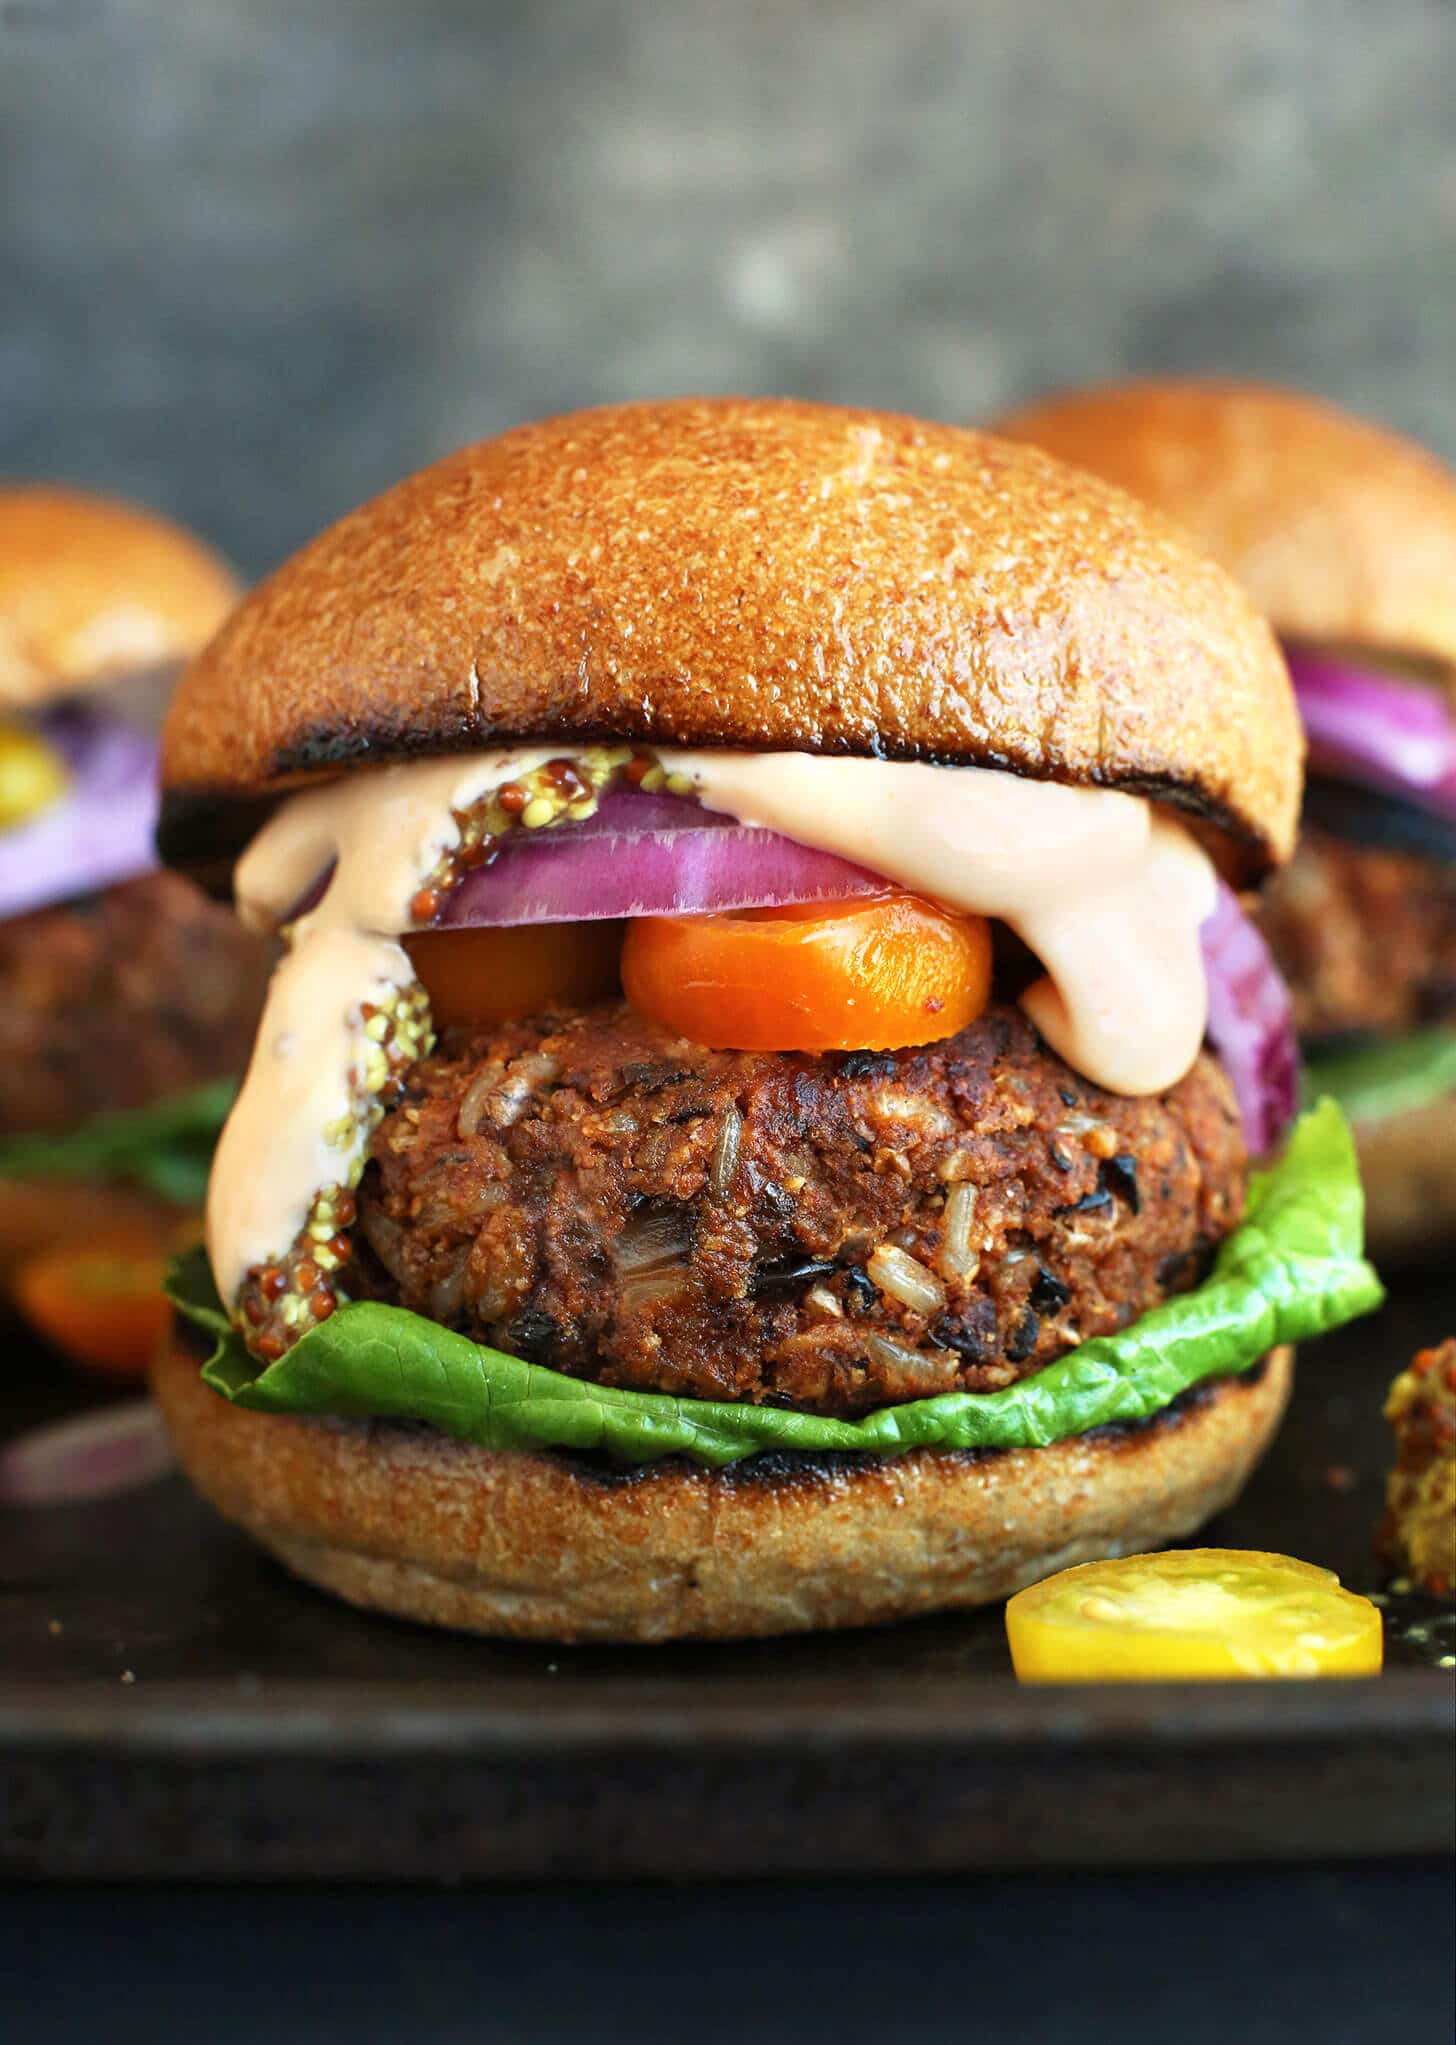 Best Healthy Burger Recipes for Summer |Gluten Free,Vegan,Paleo